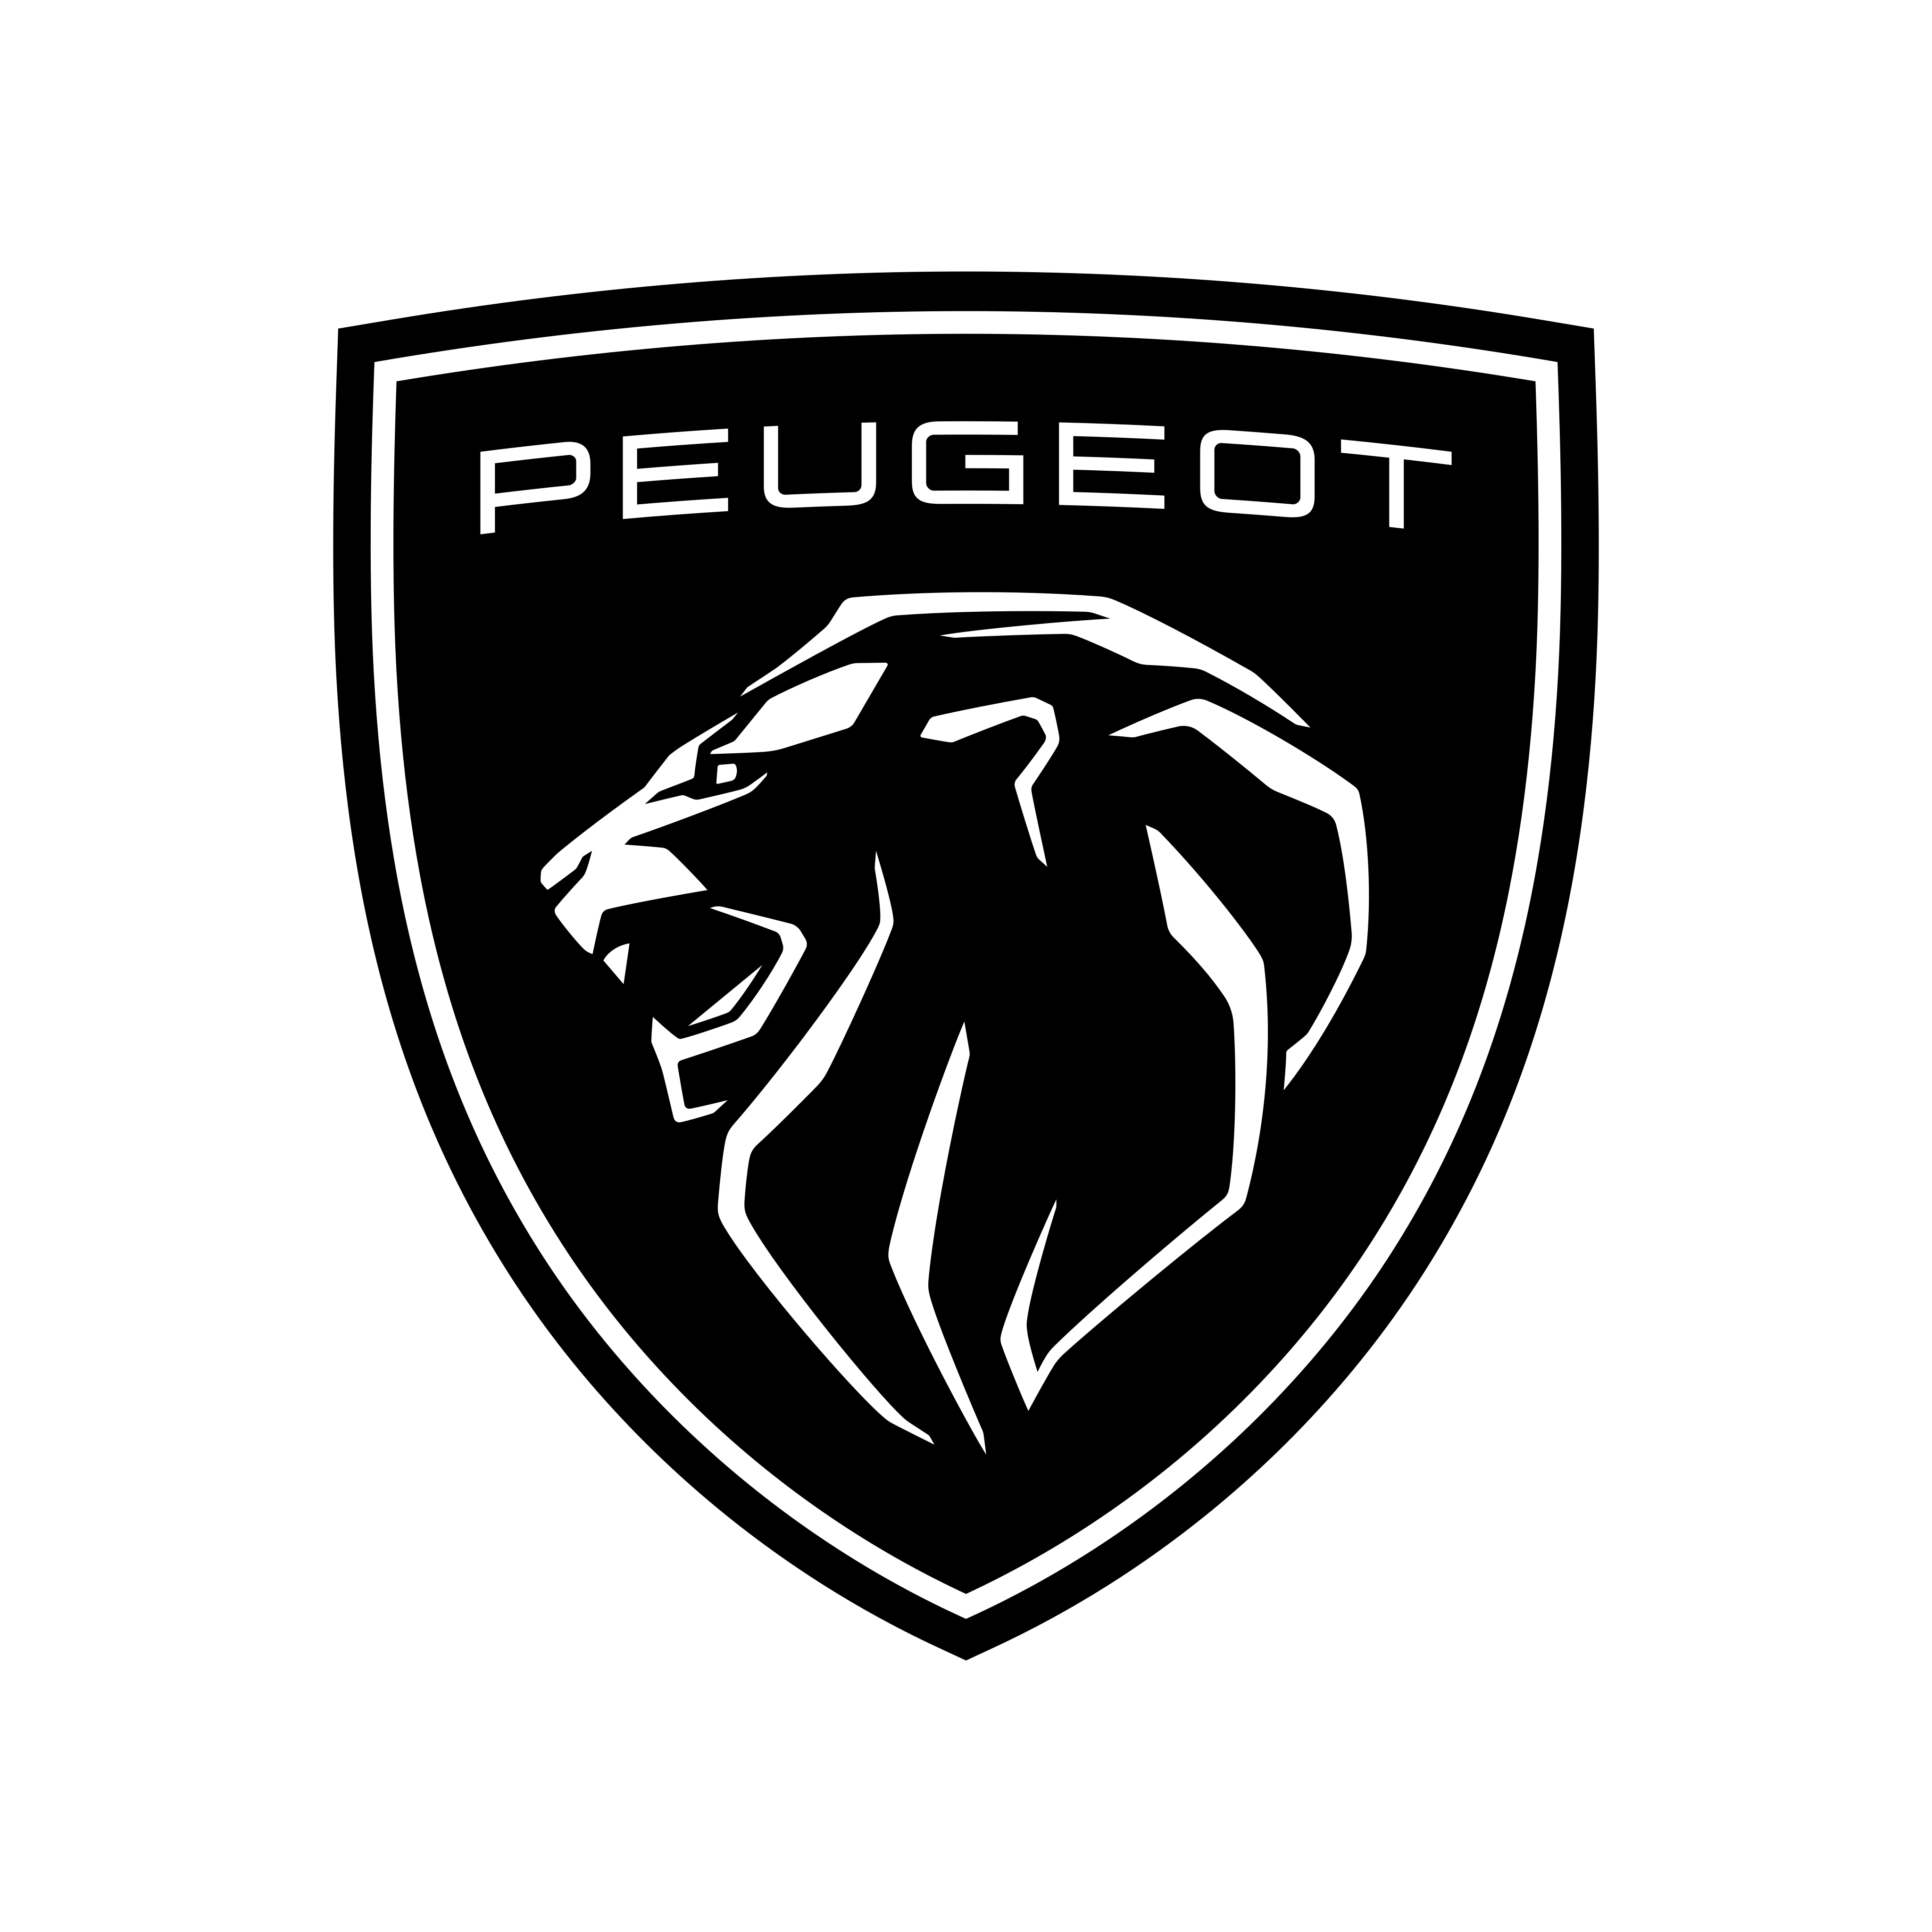 peugeot logo 0 1 - Peugeot Logo